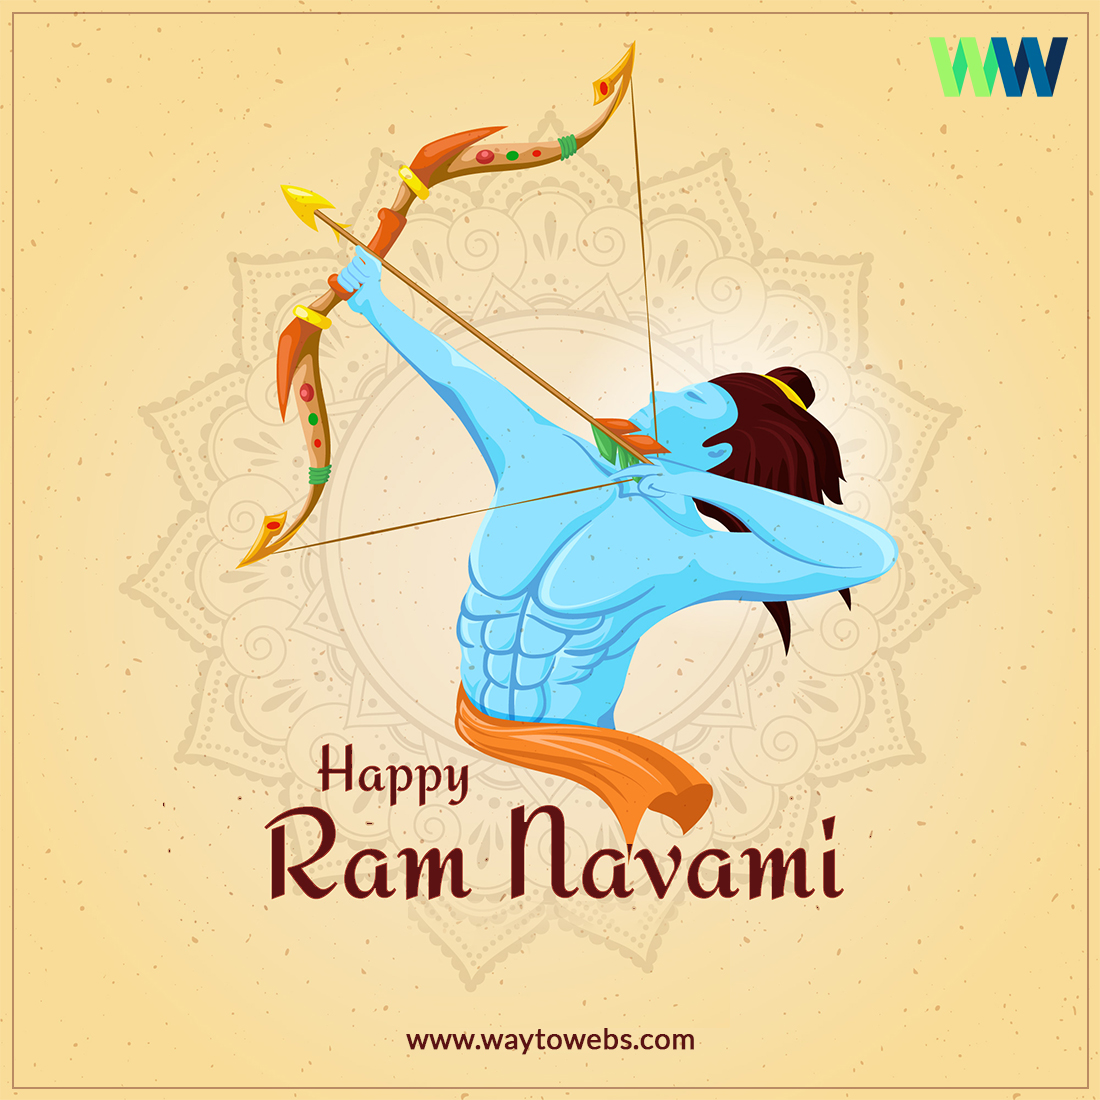 Happy Ram Navami! May the blessings of Lord Rama fill your life with happiness, prosperity, & success. #RamNavami #JaiShriRam #Ramayan #LordRama #RamJanmabhoomi #DivineCelebration #SpiritualJourney #Dharma #Ayodhya #webdesign #webdevelopment #digitalmarketing #waytowebs